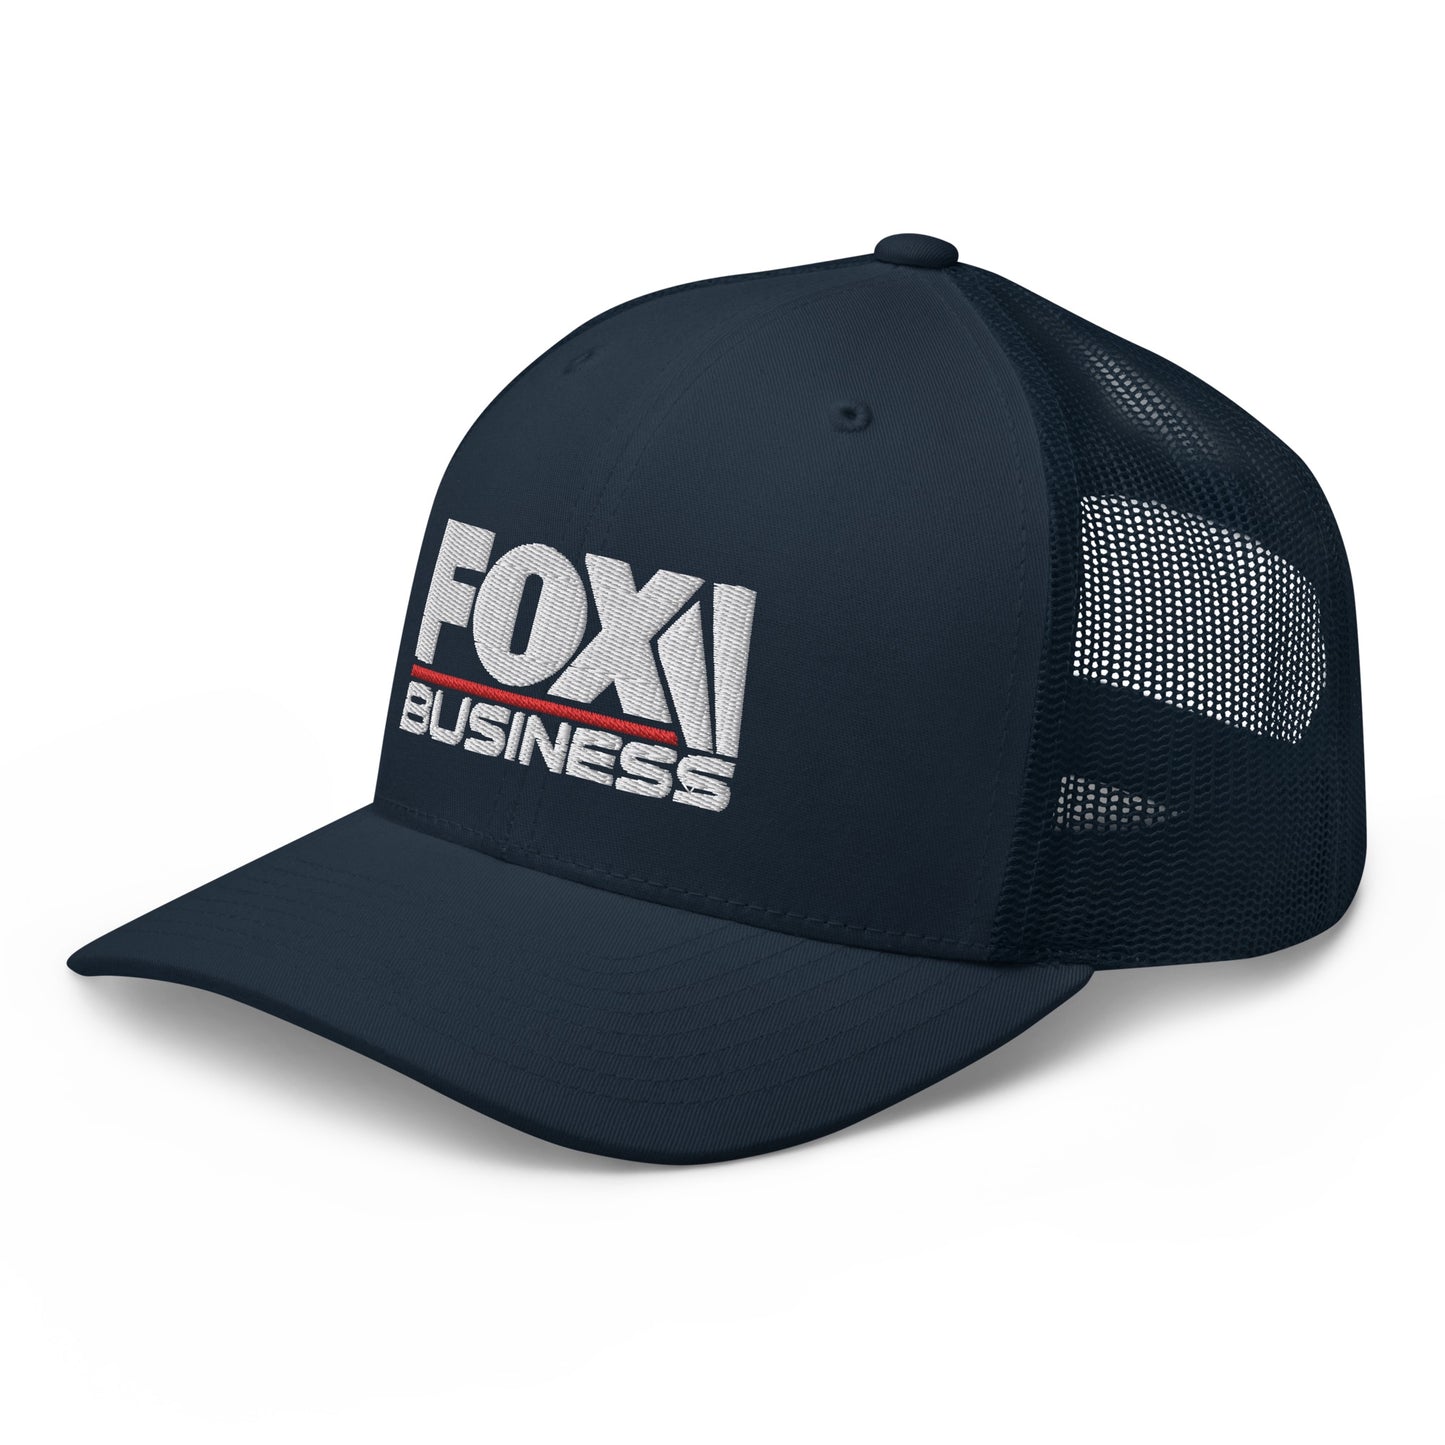 Fox Business Logo Embroidered Retro Trucker Hat